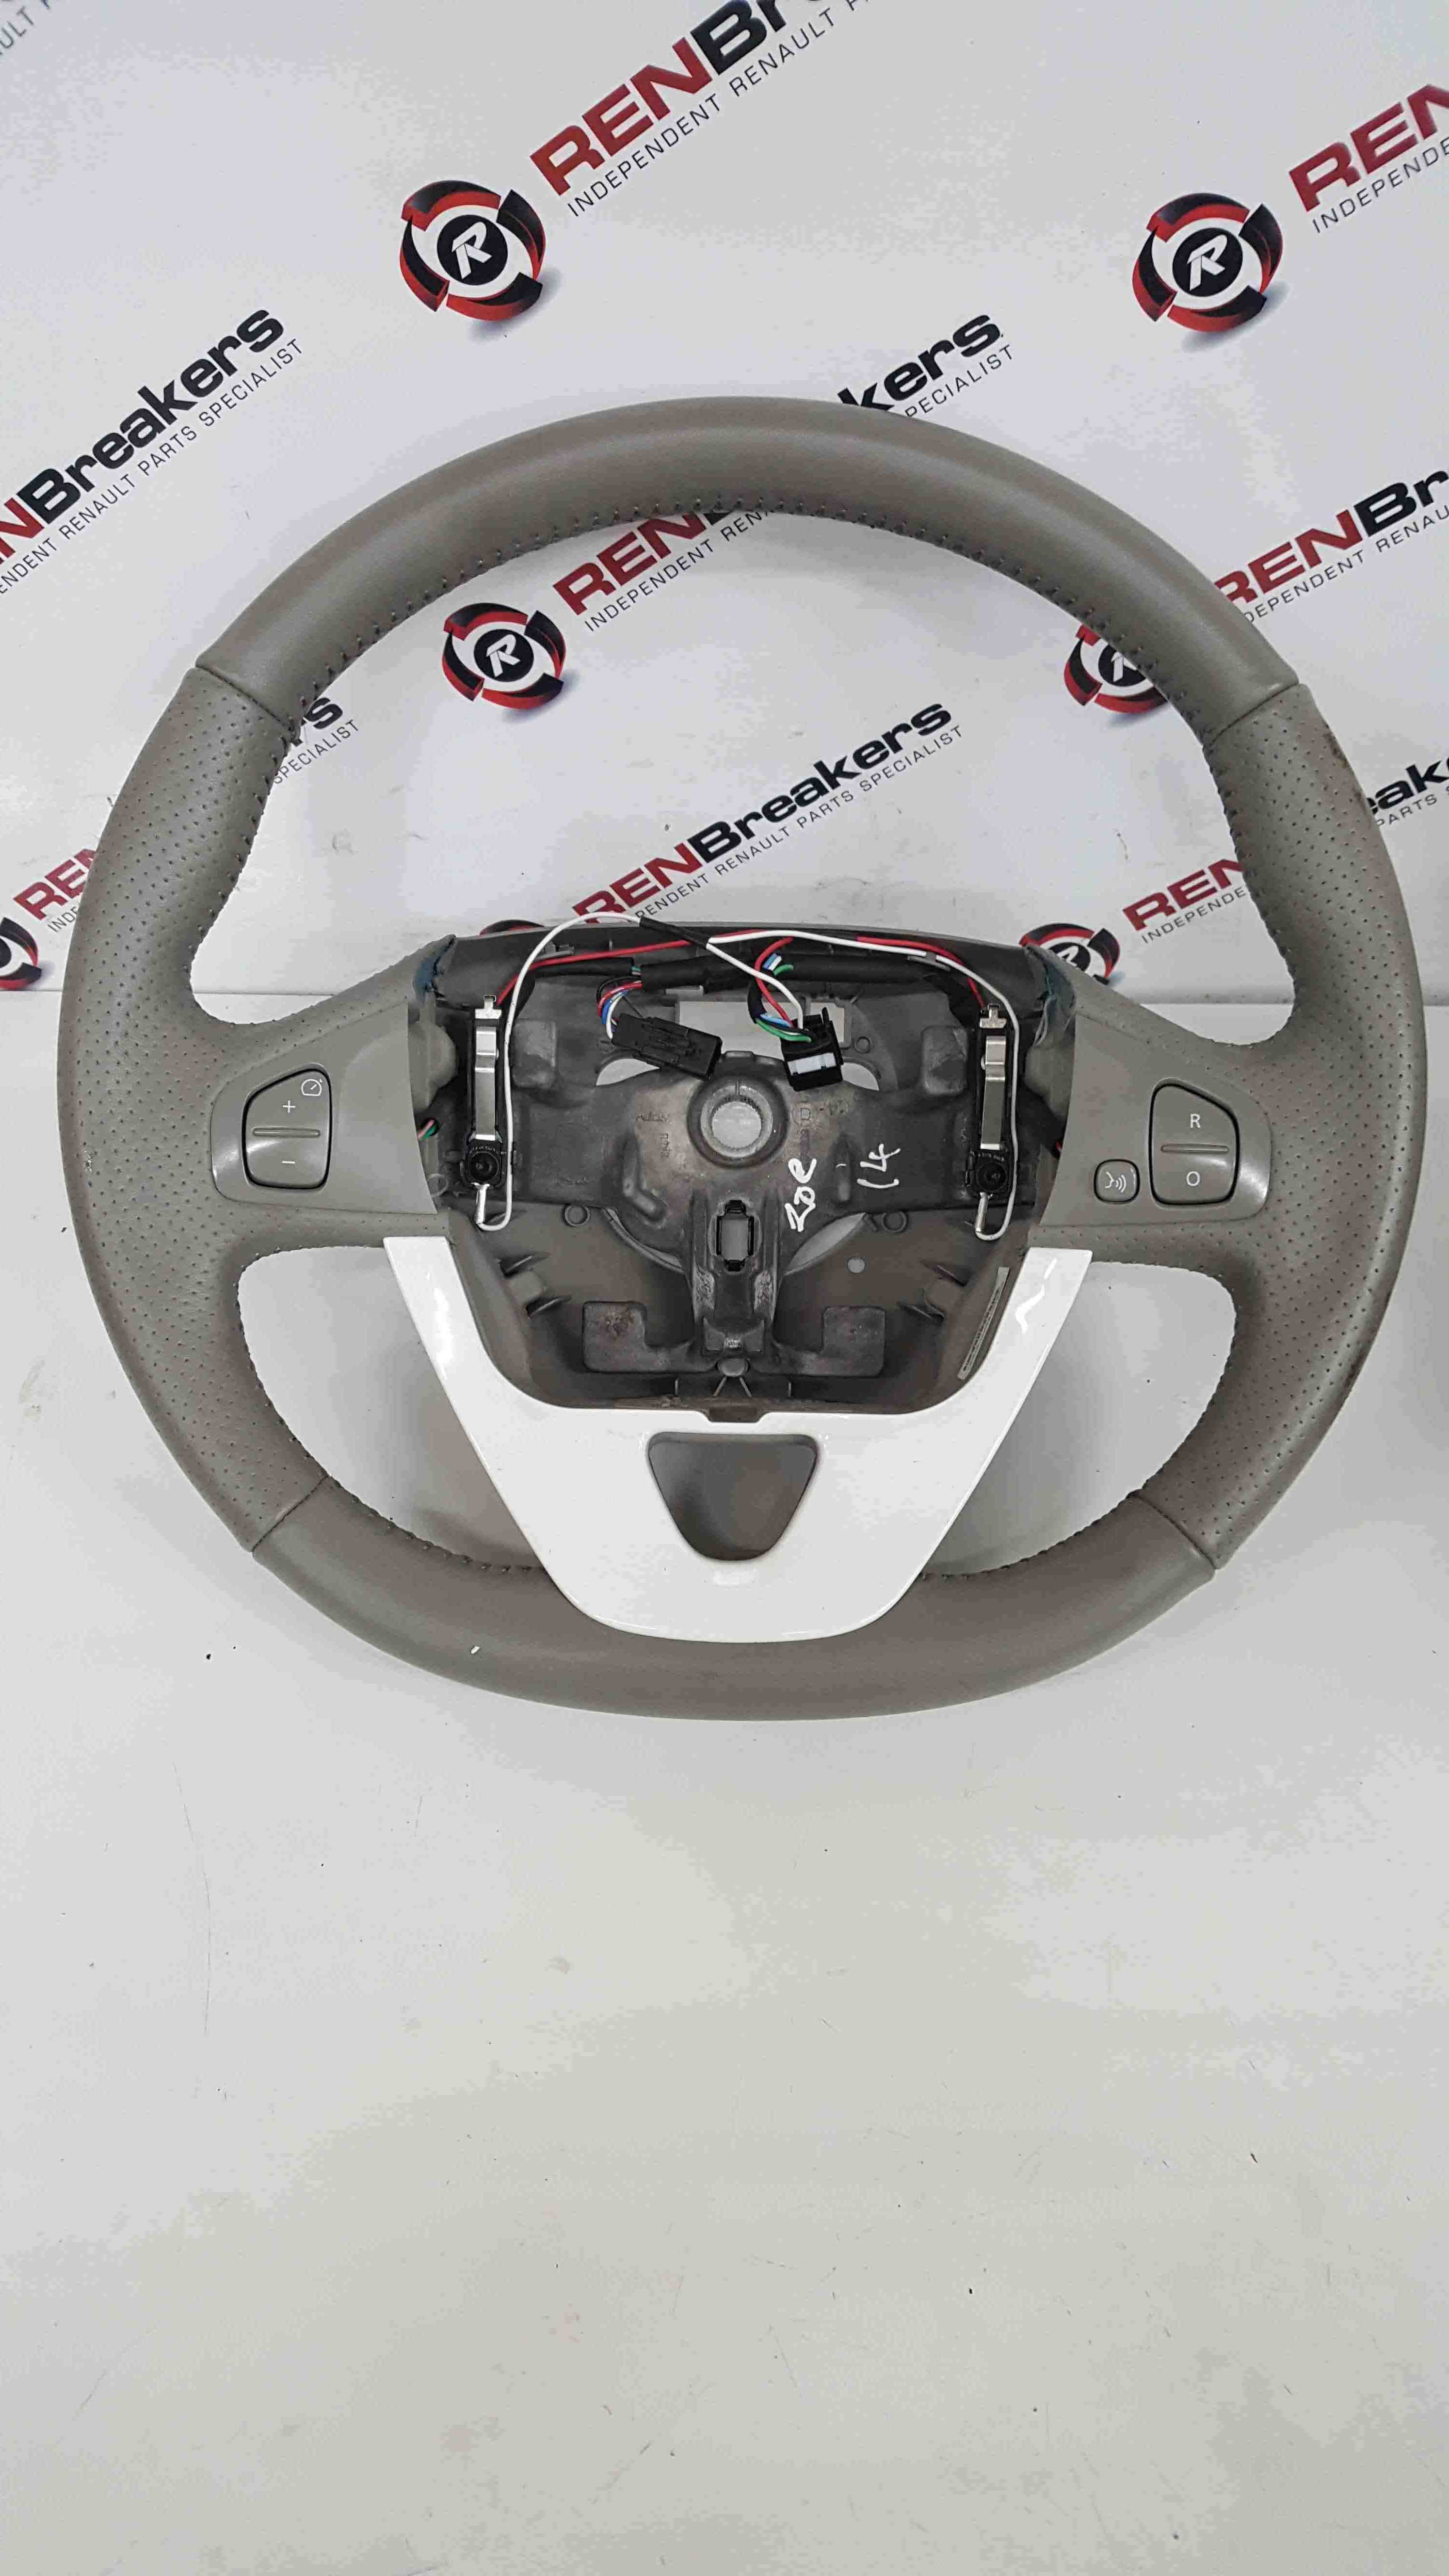 Renault Zoe 2012-2018 Steering Wheel Cruise Control Beige White Insert